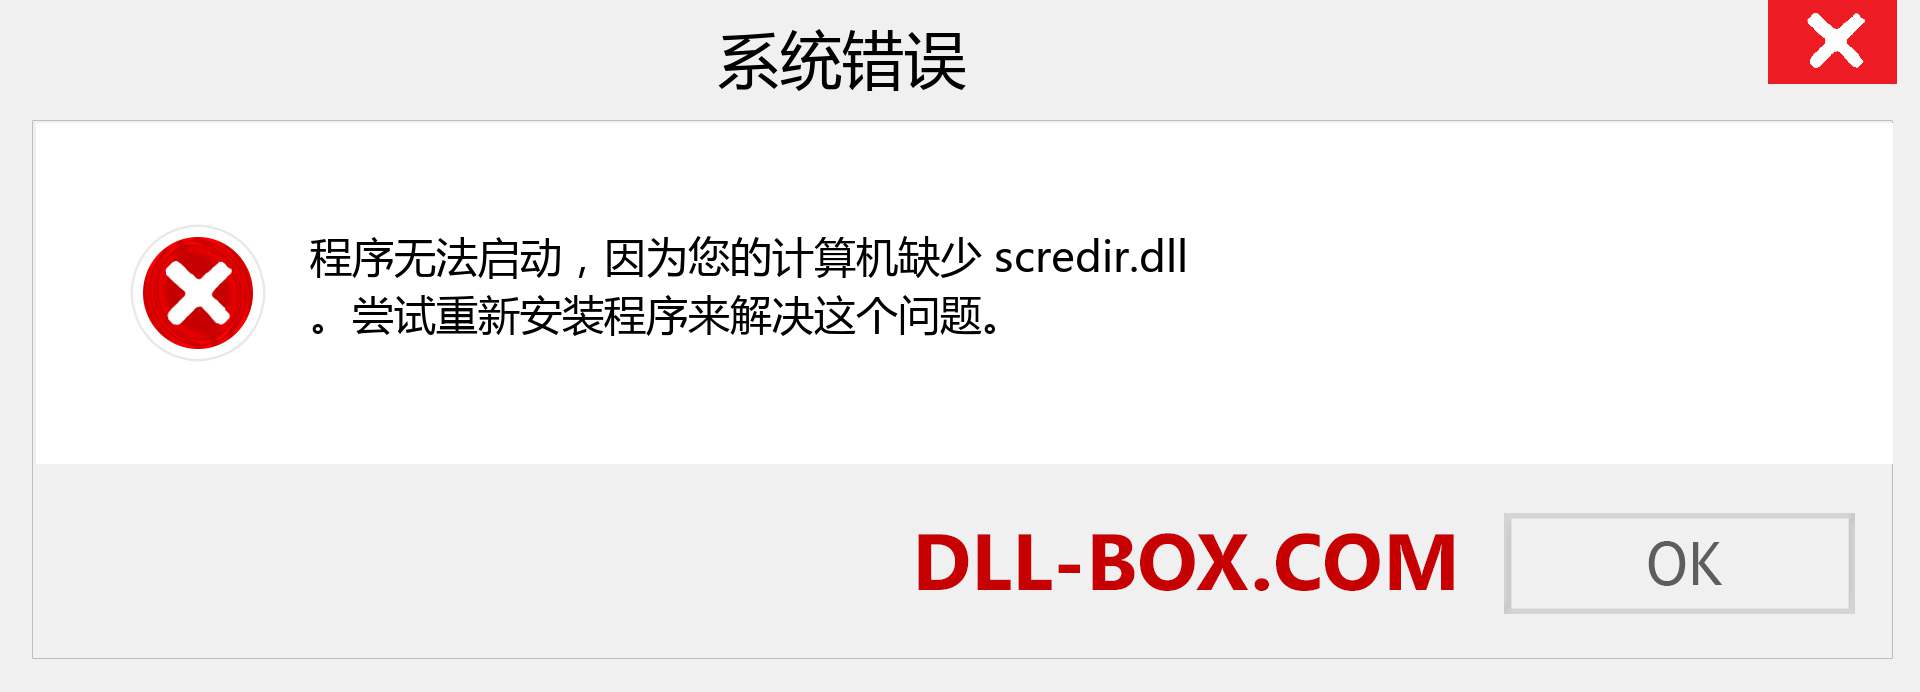 scredir.dll 文件丢失？。 适用于 Windows 7、8、10 的下载 - 修复 Windows、照片、图像上的 scredir dll 丢失错误